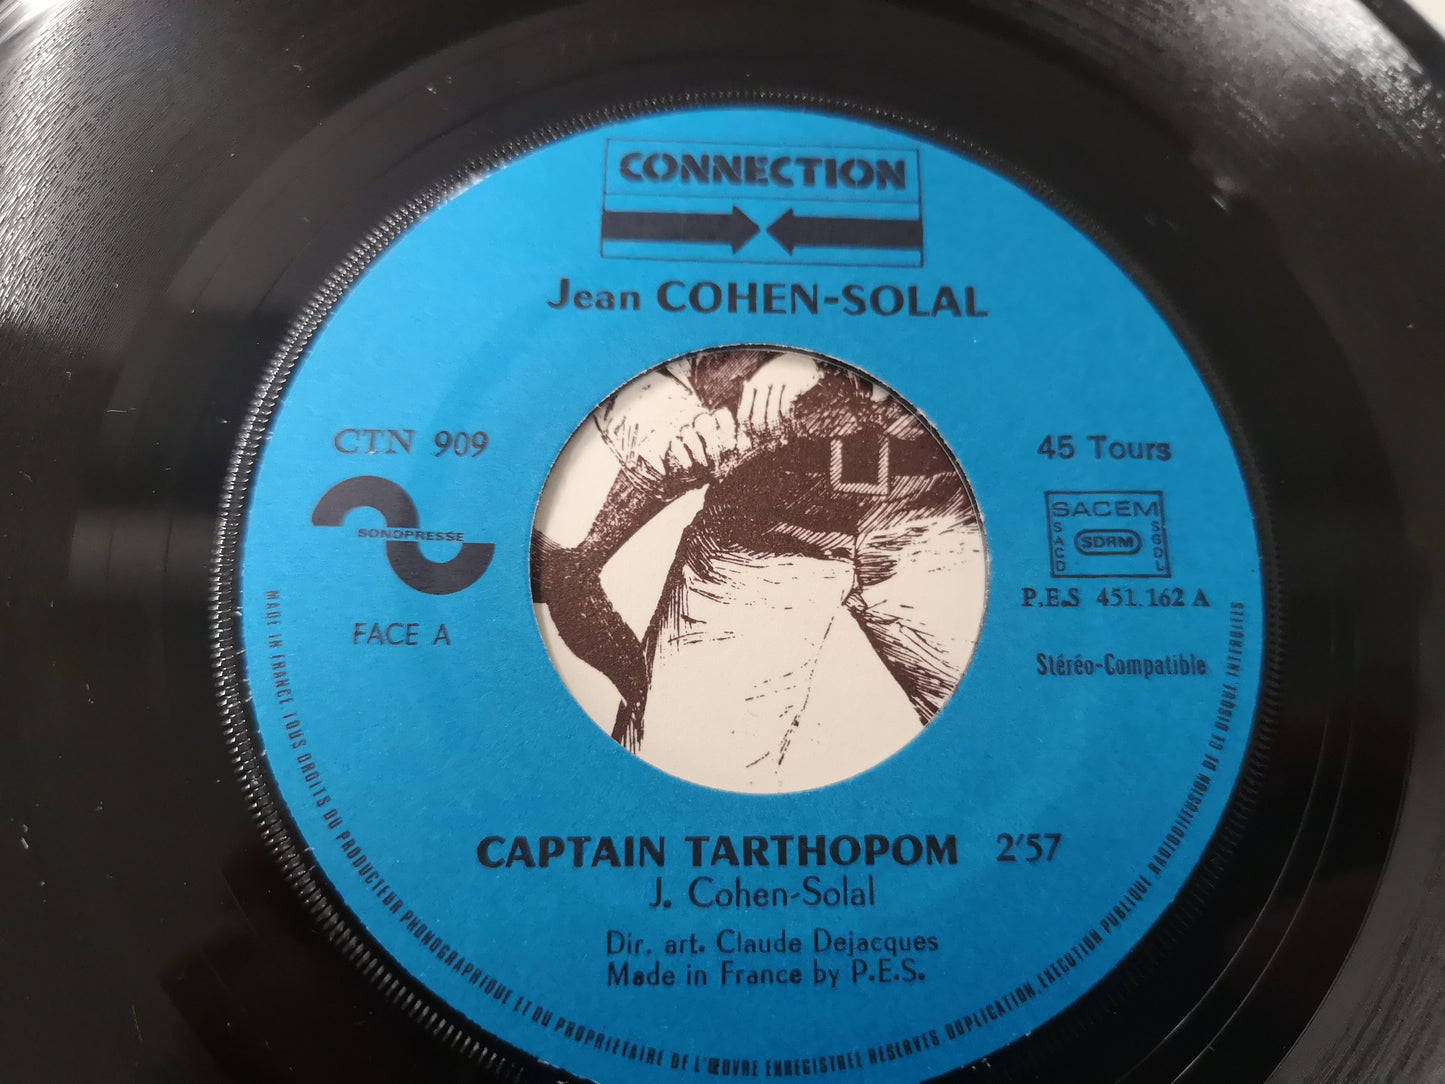 Jean Cohen-Solal "Captain Tarthopom" Orig France 1971 M-/M- (7" Single)